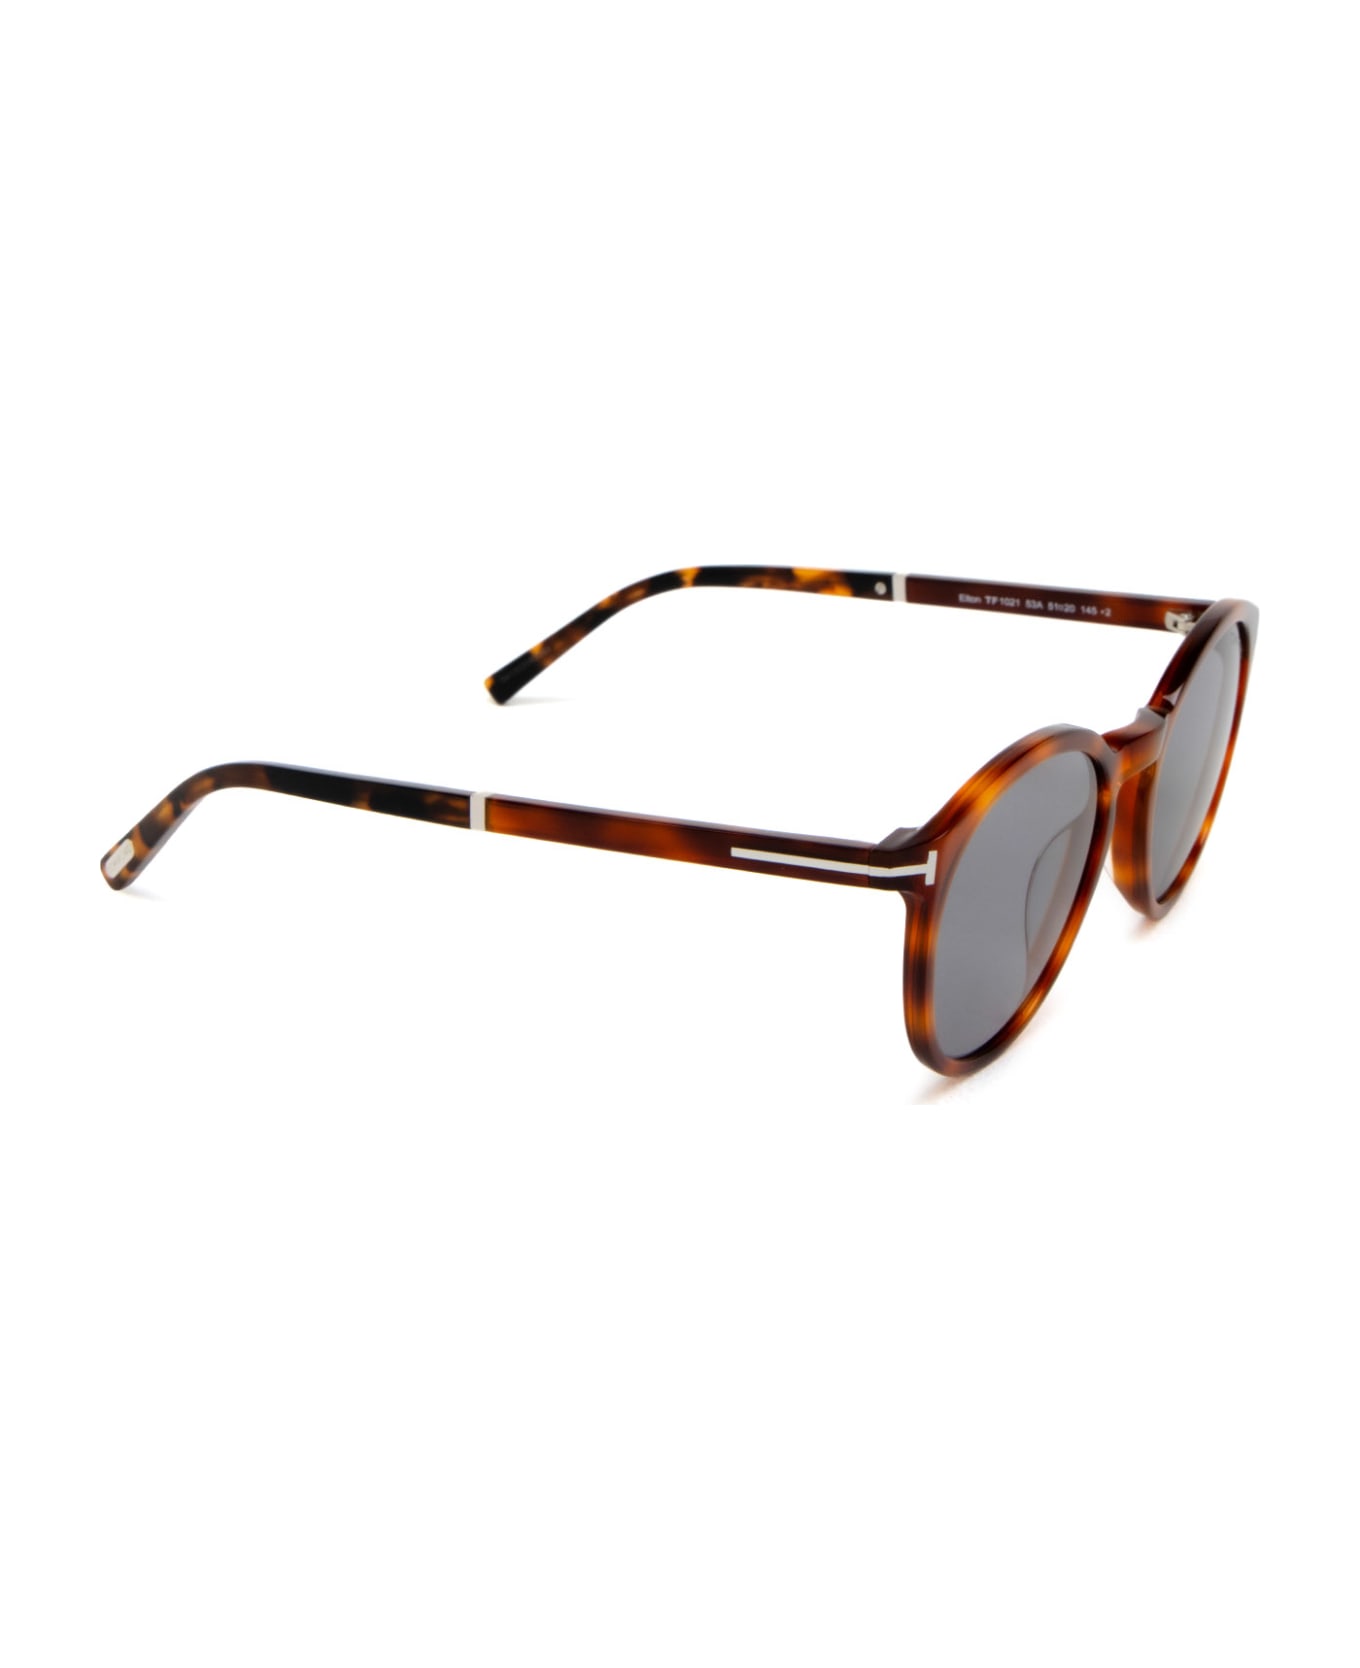 Tom Ford Eyewear Ft1021 Havana Sunglasses - Havana